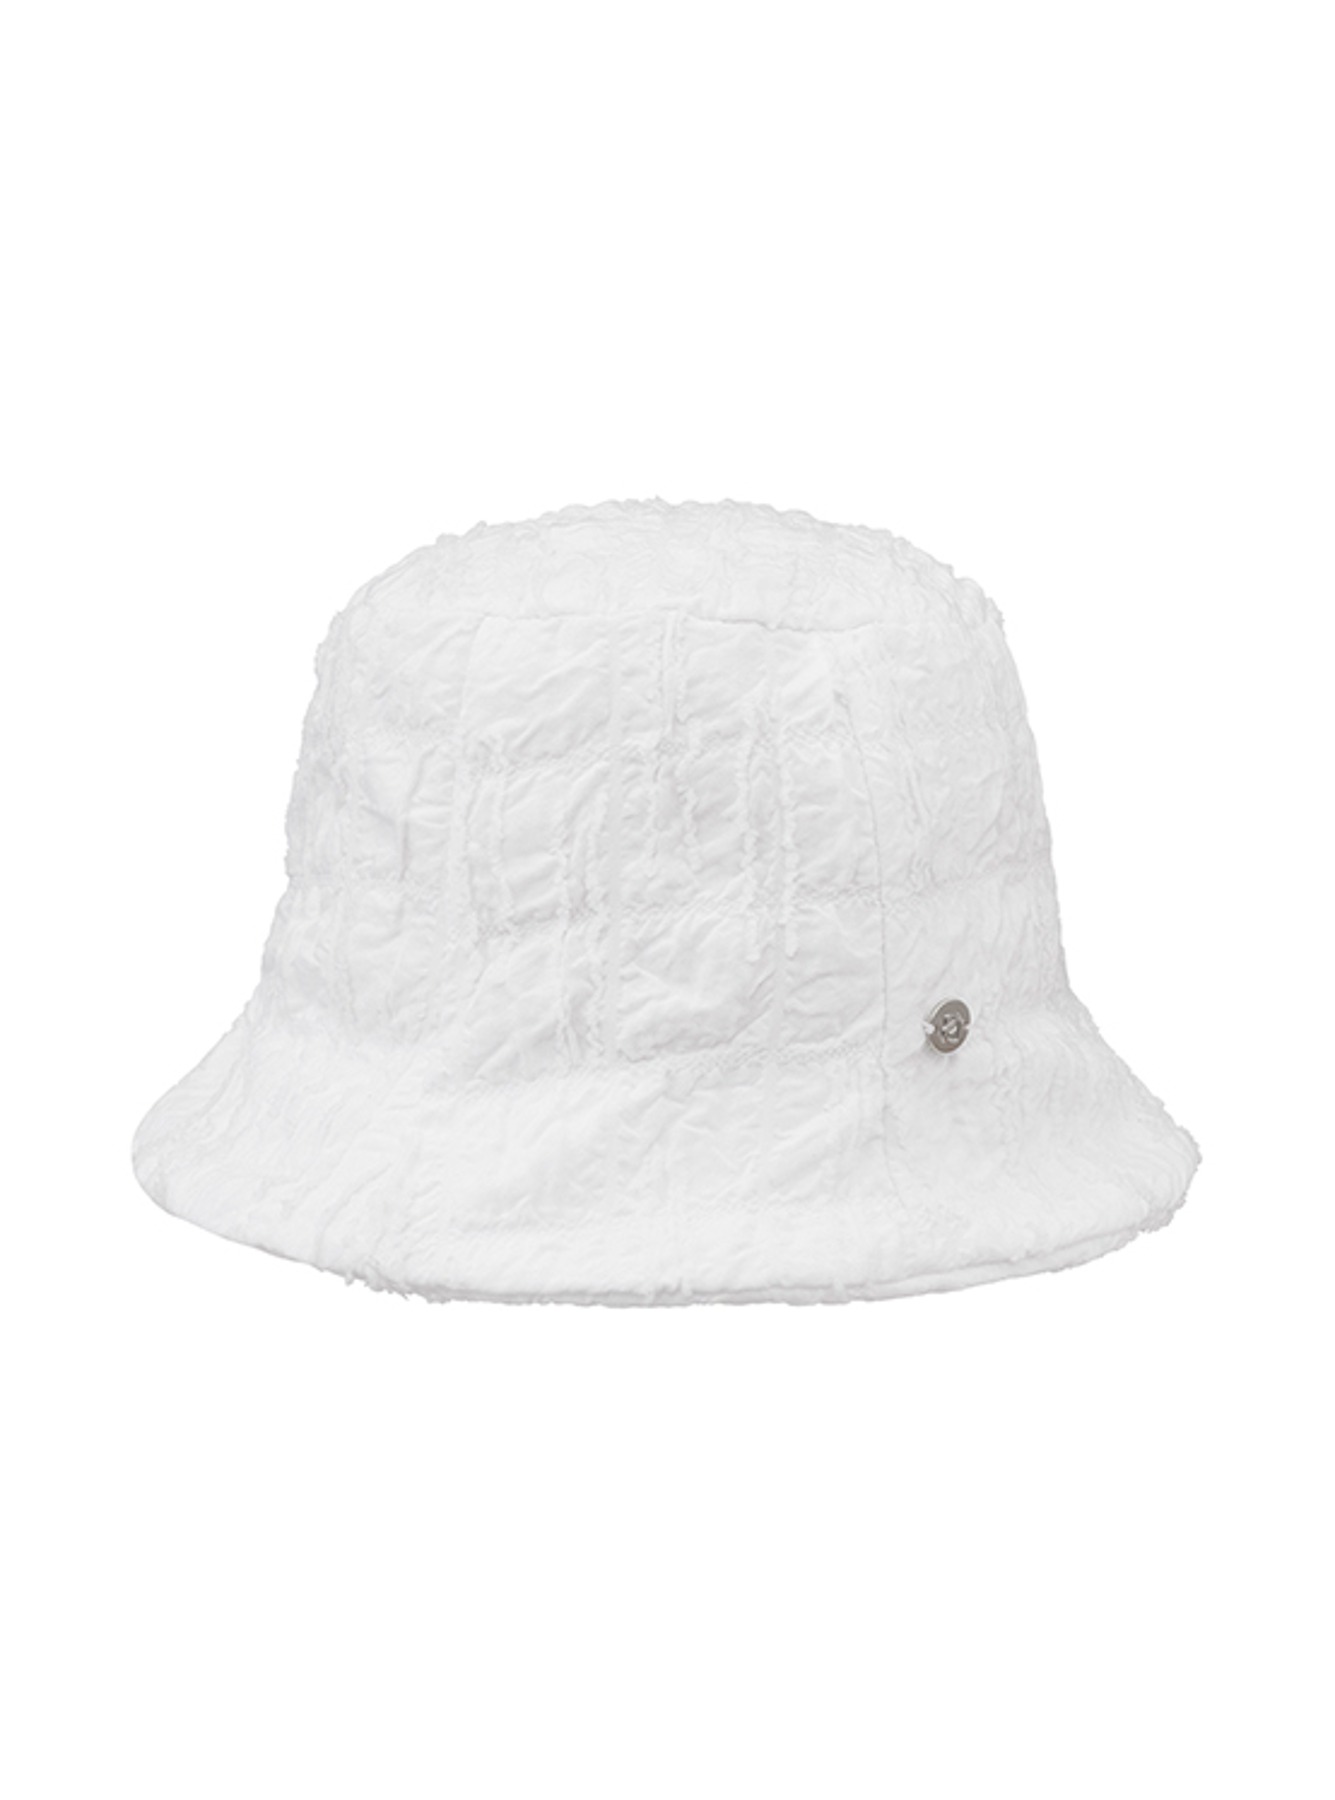 Jacquard Linkle Bucket Hat in White VX4MA313-01